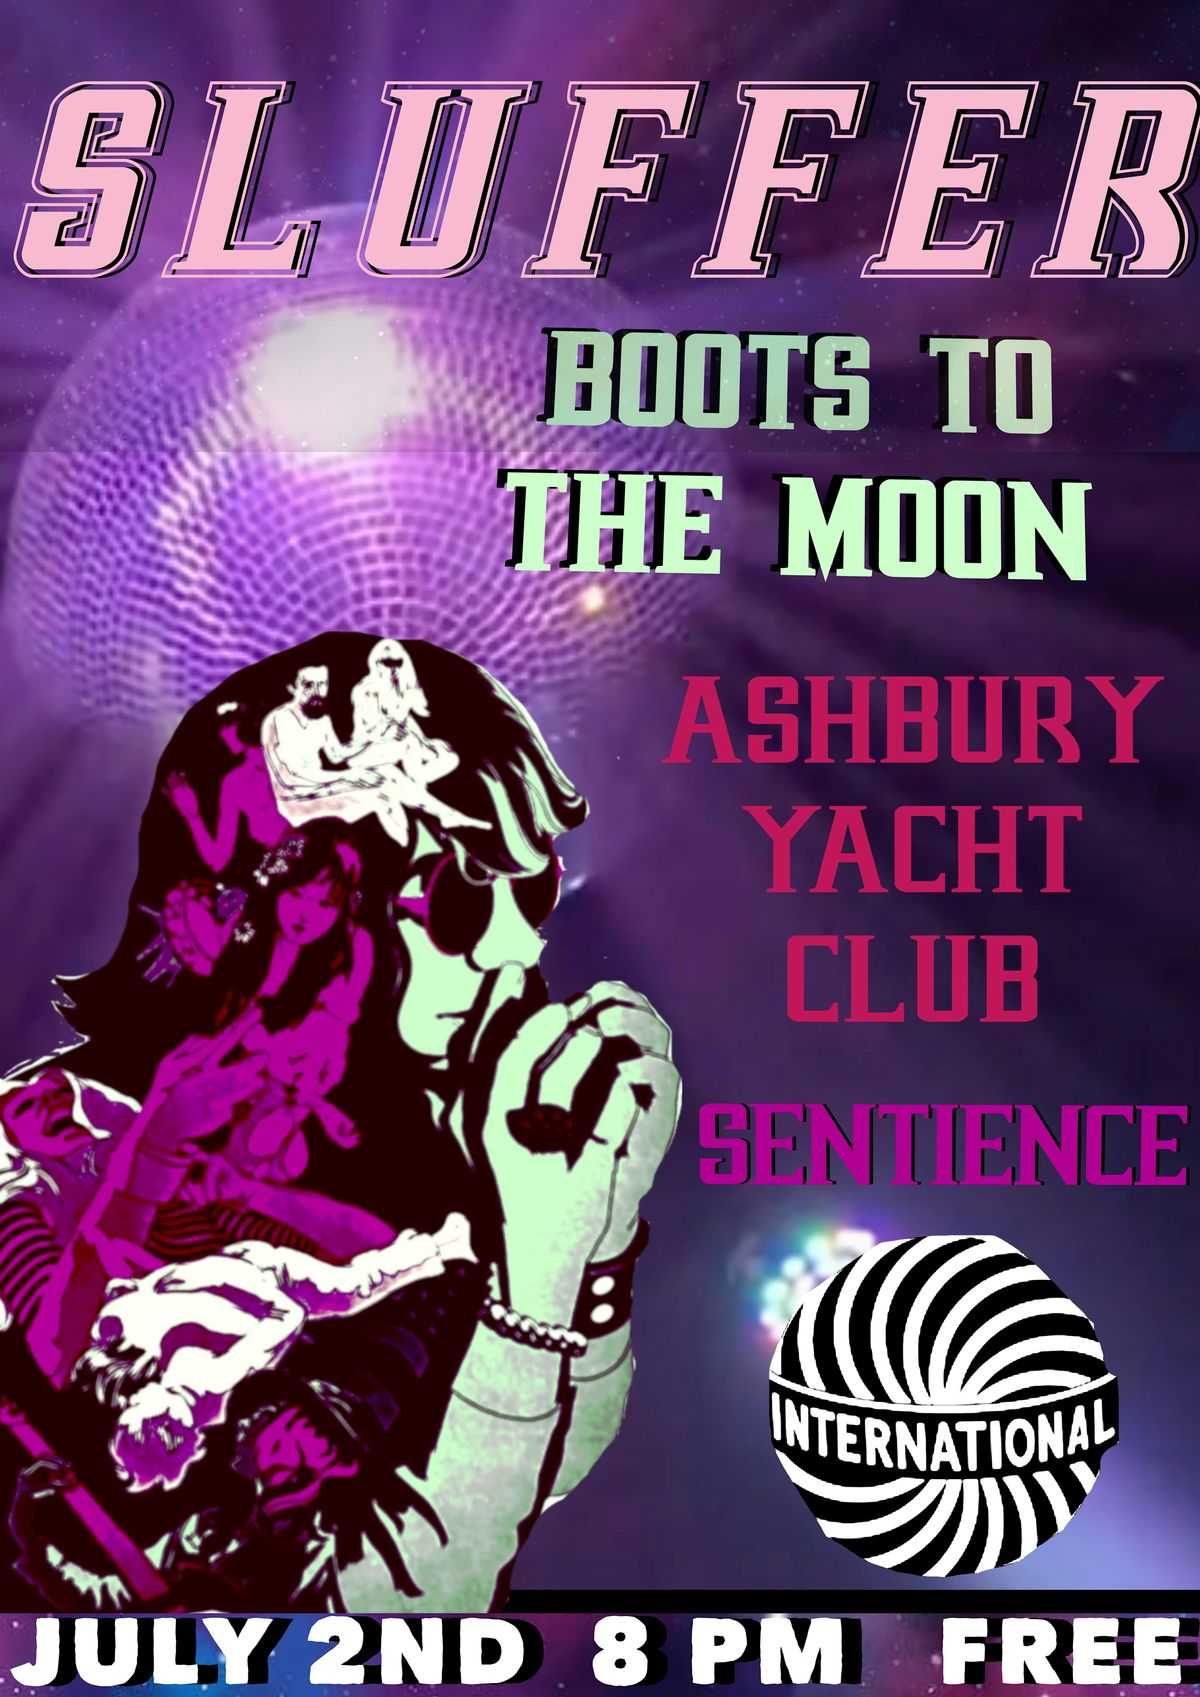 Sluffer, Sentience, Boots to the Moon & Ashbury Yacht Club